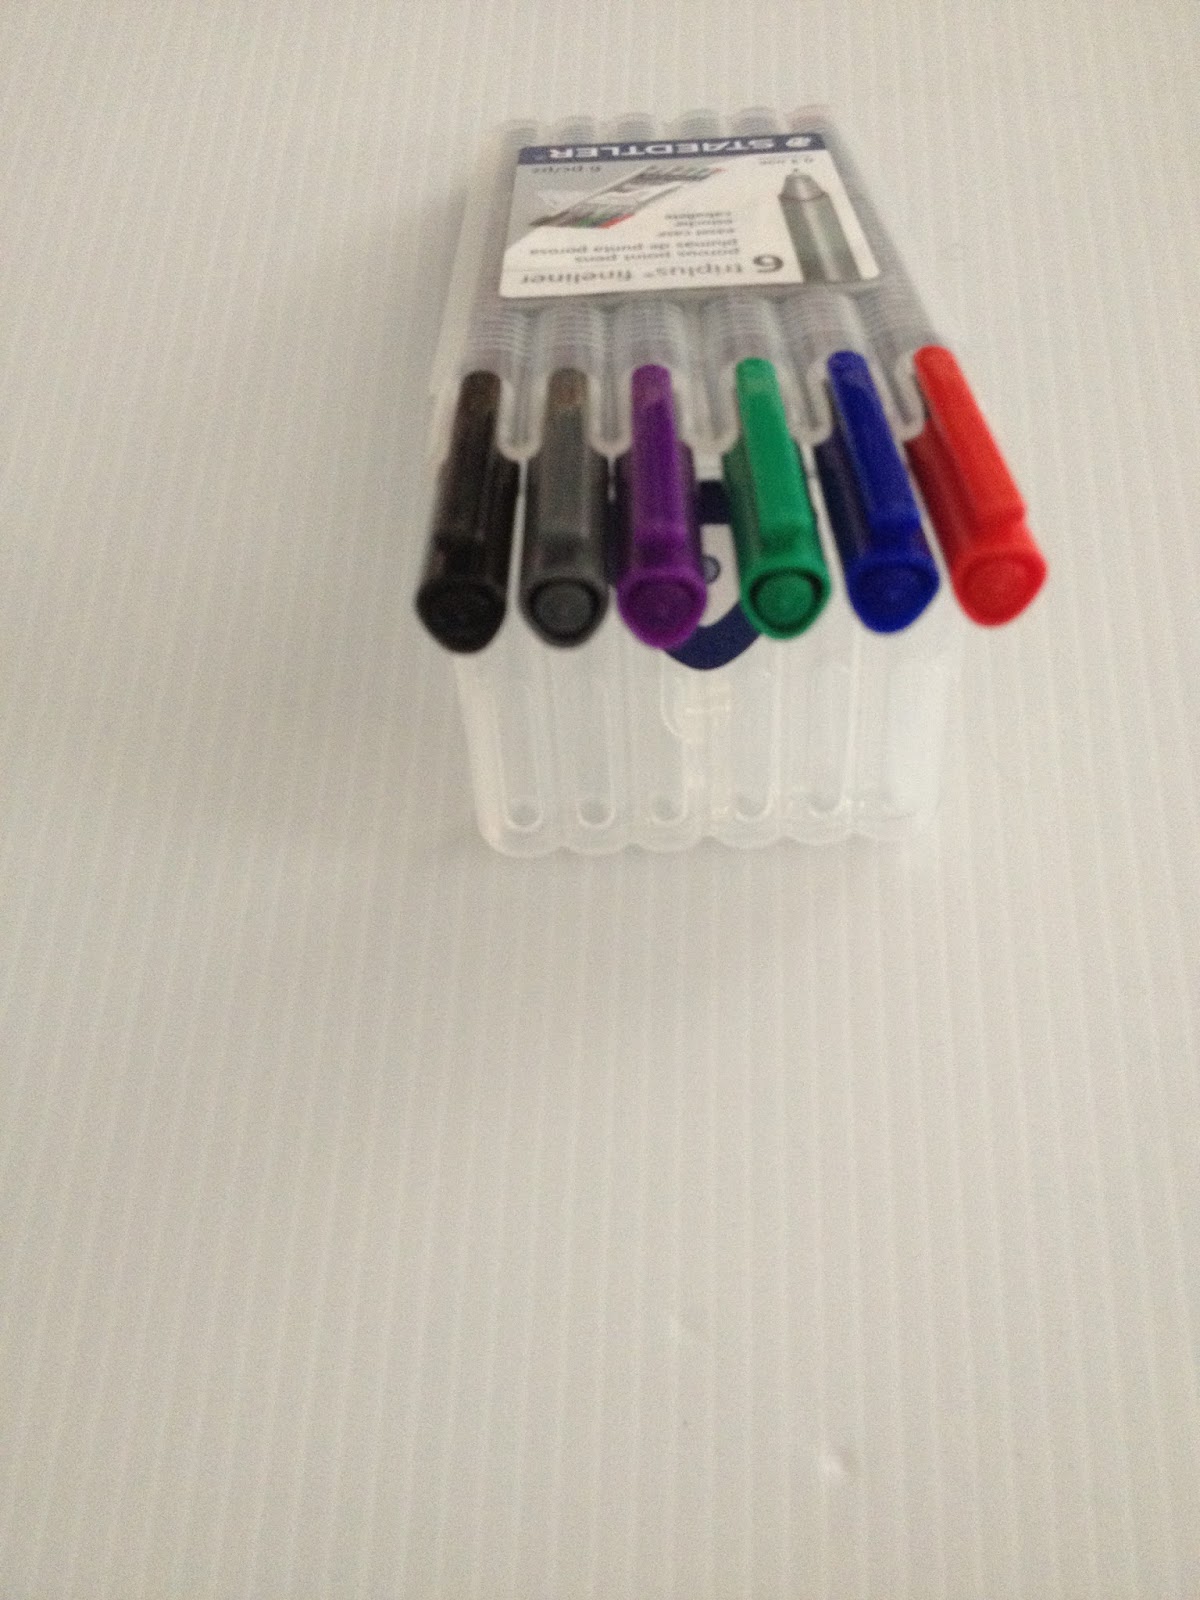 Staedtler Triplus Fineliner .3 mm Colored Pens- set of 10 — Two